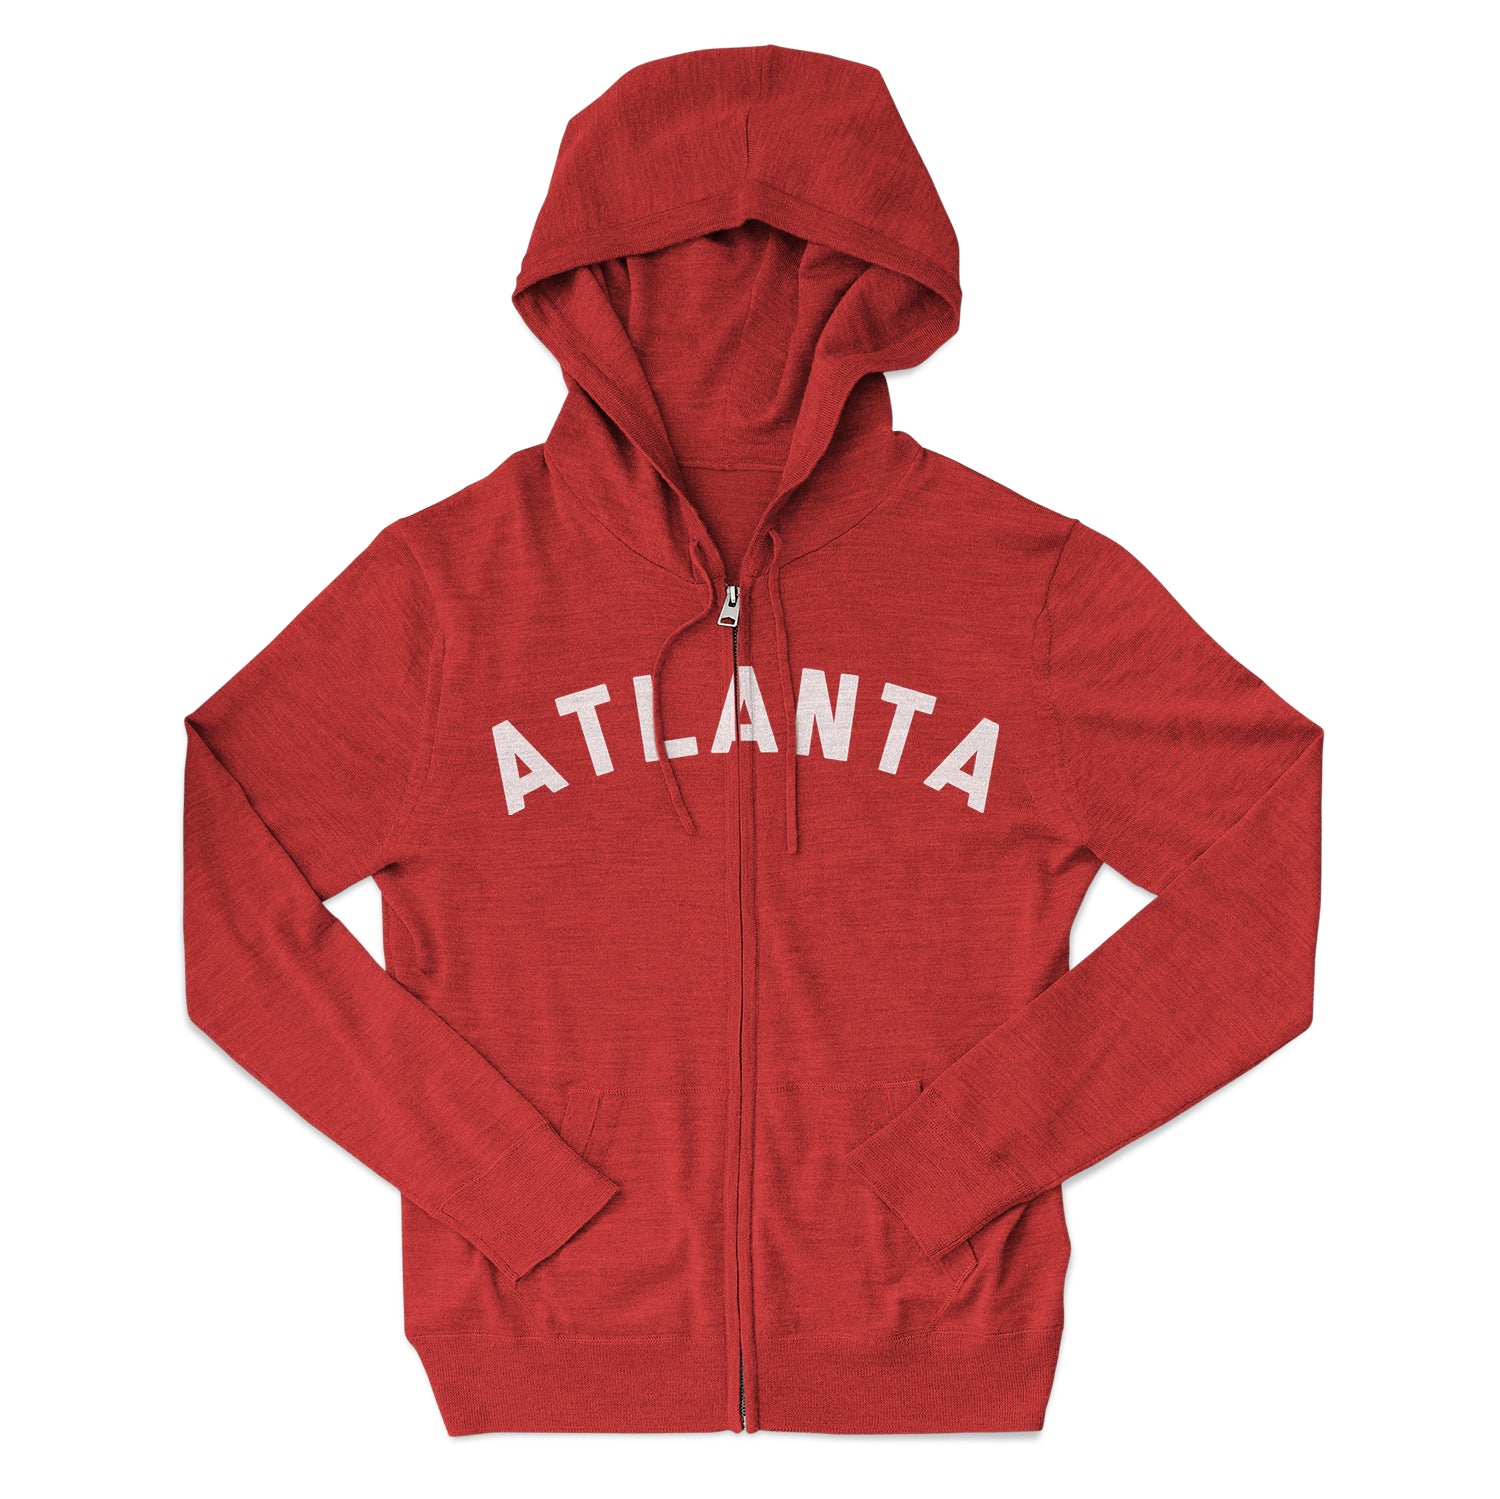 atlanta georgia hoodie